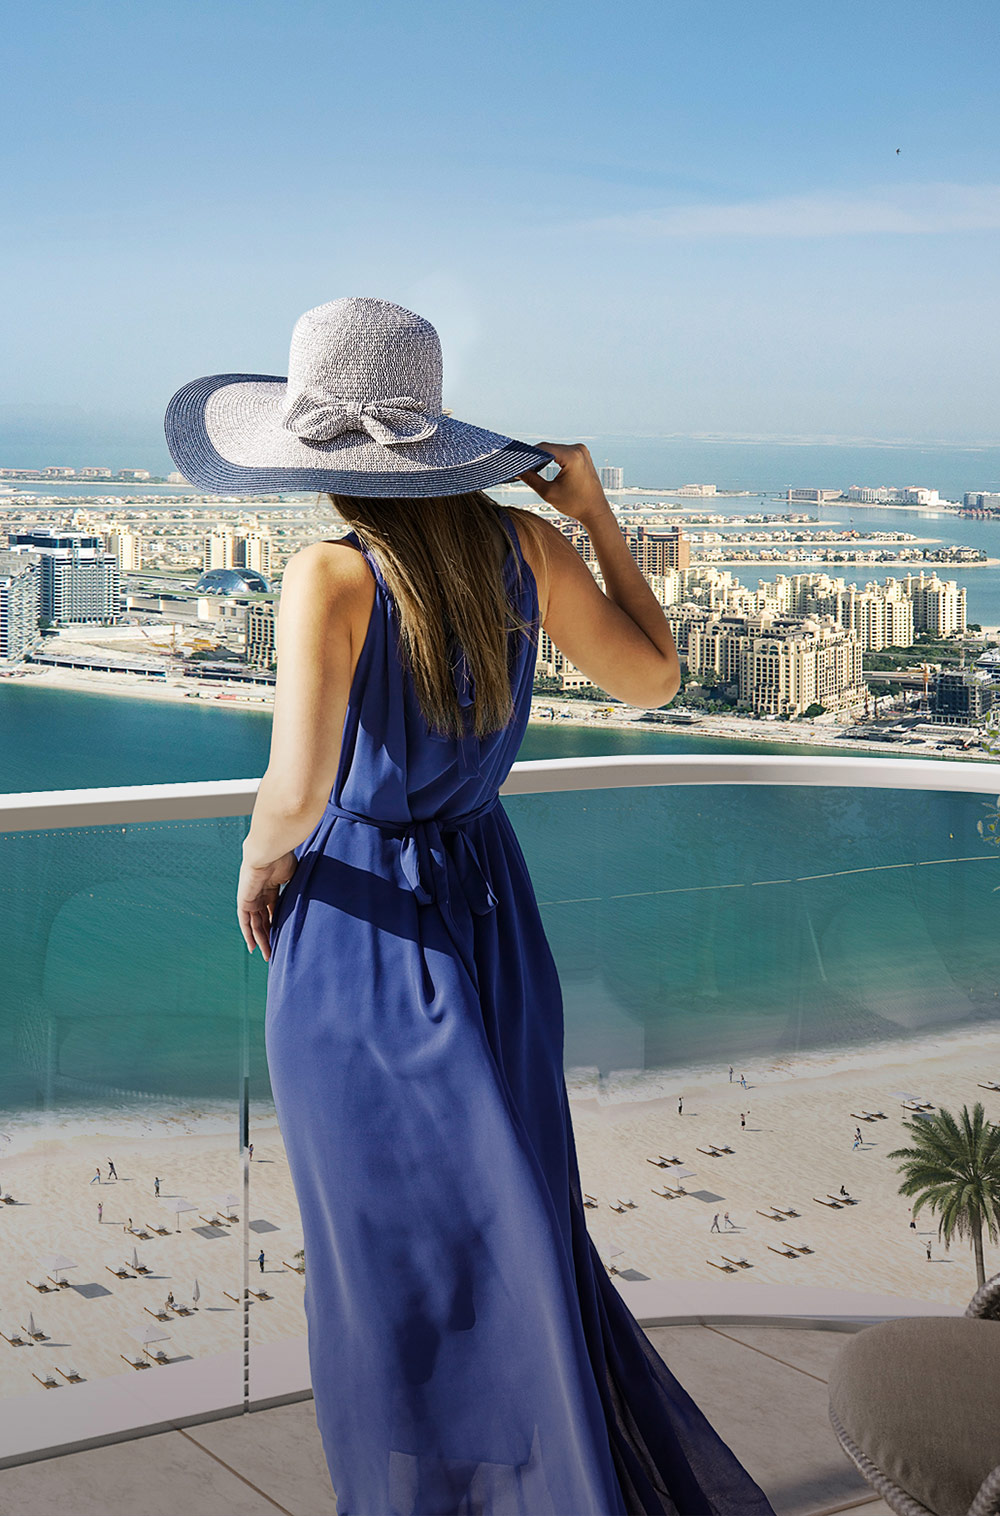 Emaar Beachfront Address Residences The Bay – Apartments for Sale in Dubai